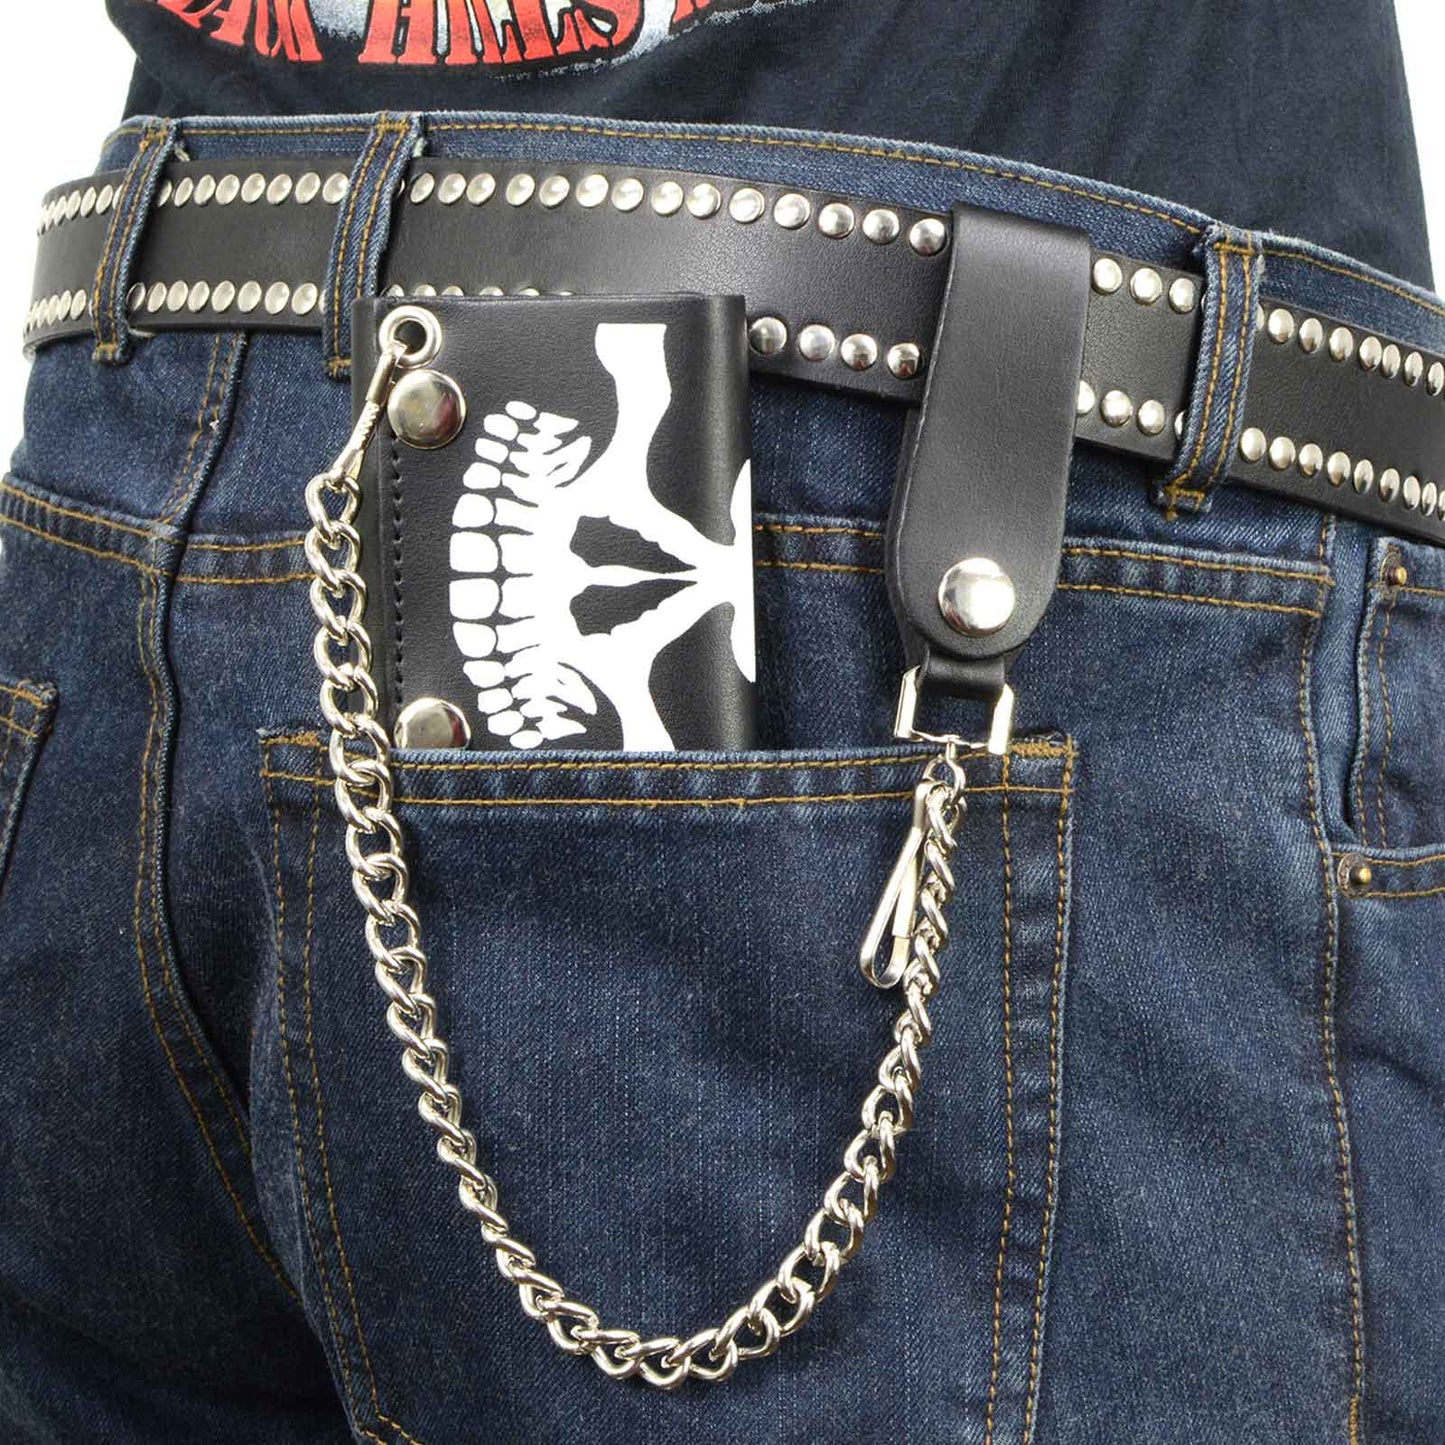 Milwaukee Leather MLW7834 Men's 4” Leather “Skeleton Teeth” Tri-Fold Wallet w/ Anti-Theft Stainless Steel Chain